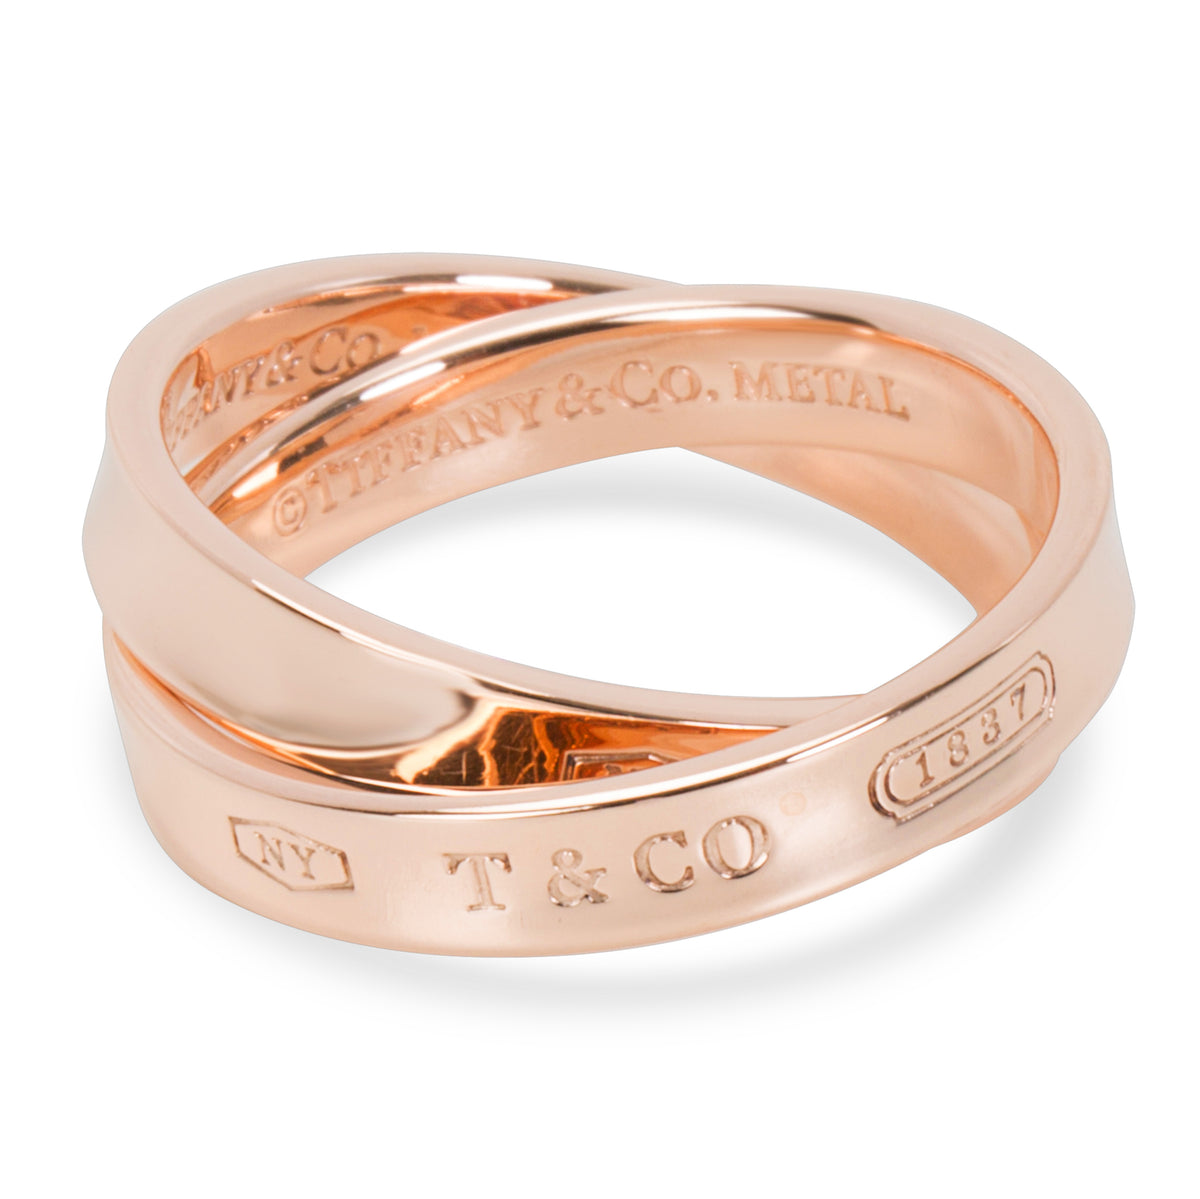 Tiffany & Co. 1837 Rubedo Interlocking Circles Ring in 8K Rose Gold